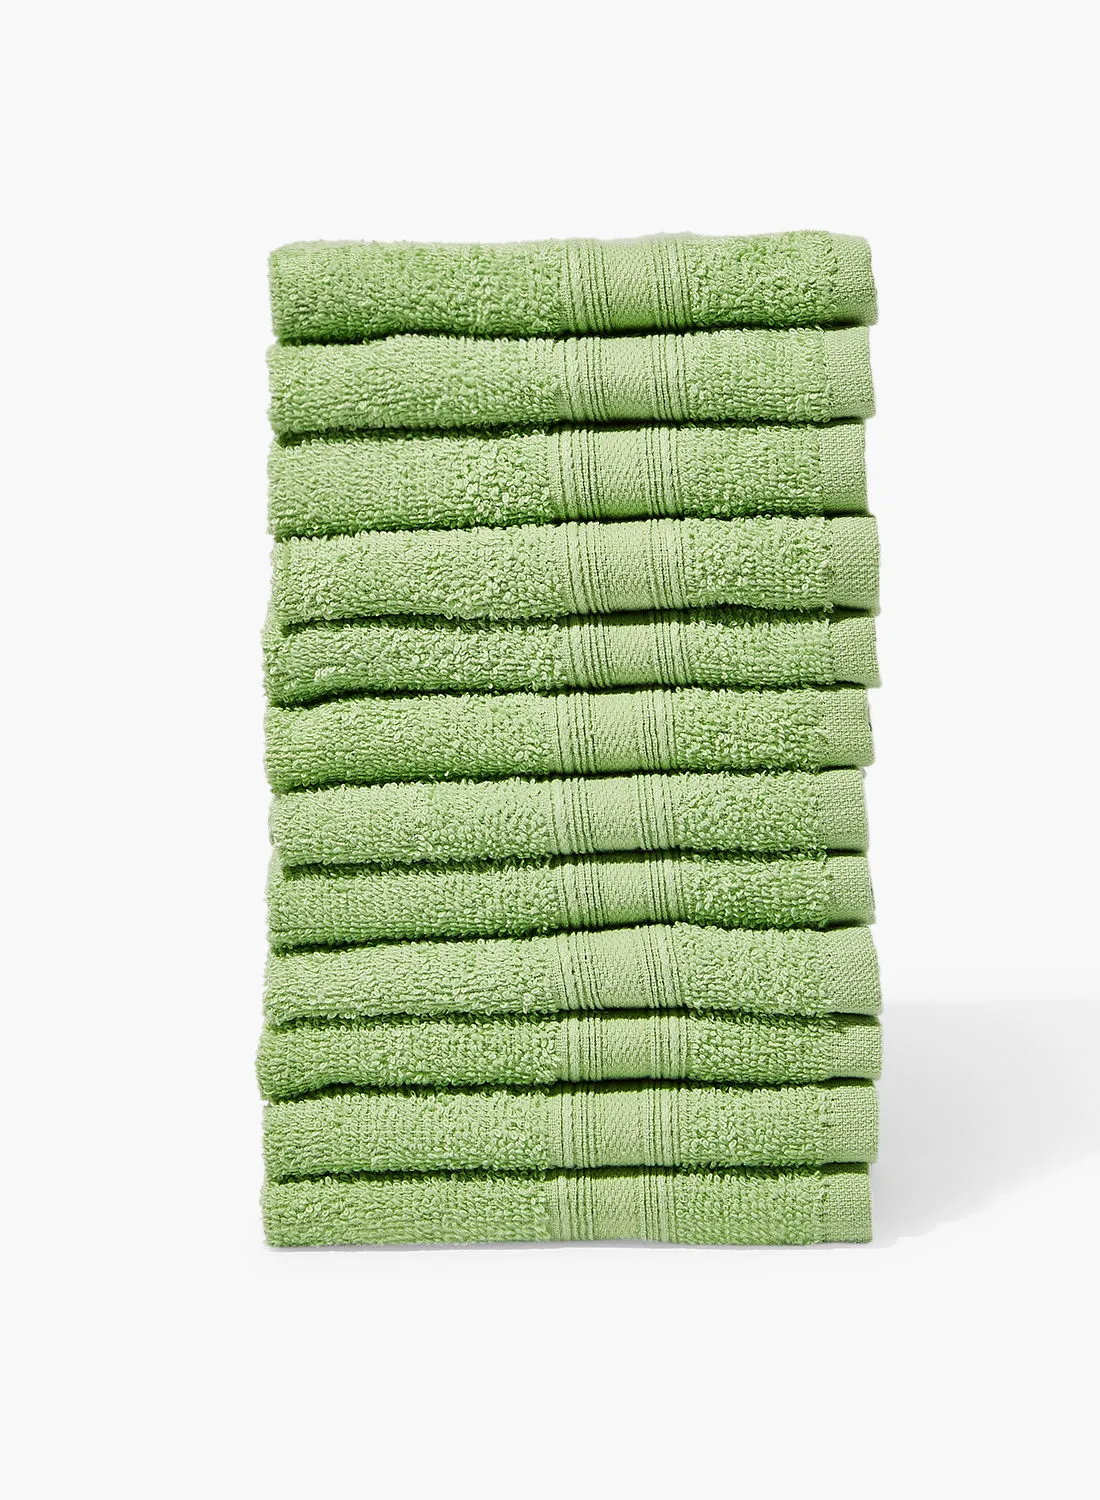 Amal 12 Piece Bathroom Towel Set - 400 GSM 100% Cotton Terry - 12 Face Towel - Green_Apple Color -Quick Dry - Super Absorbent